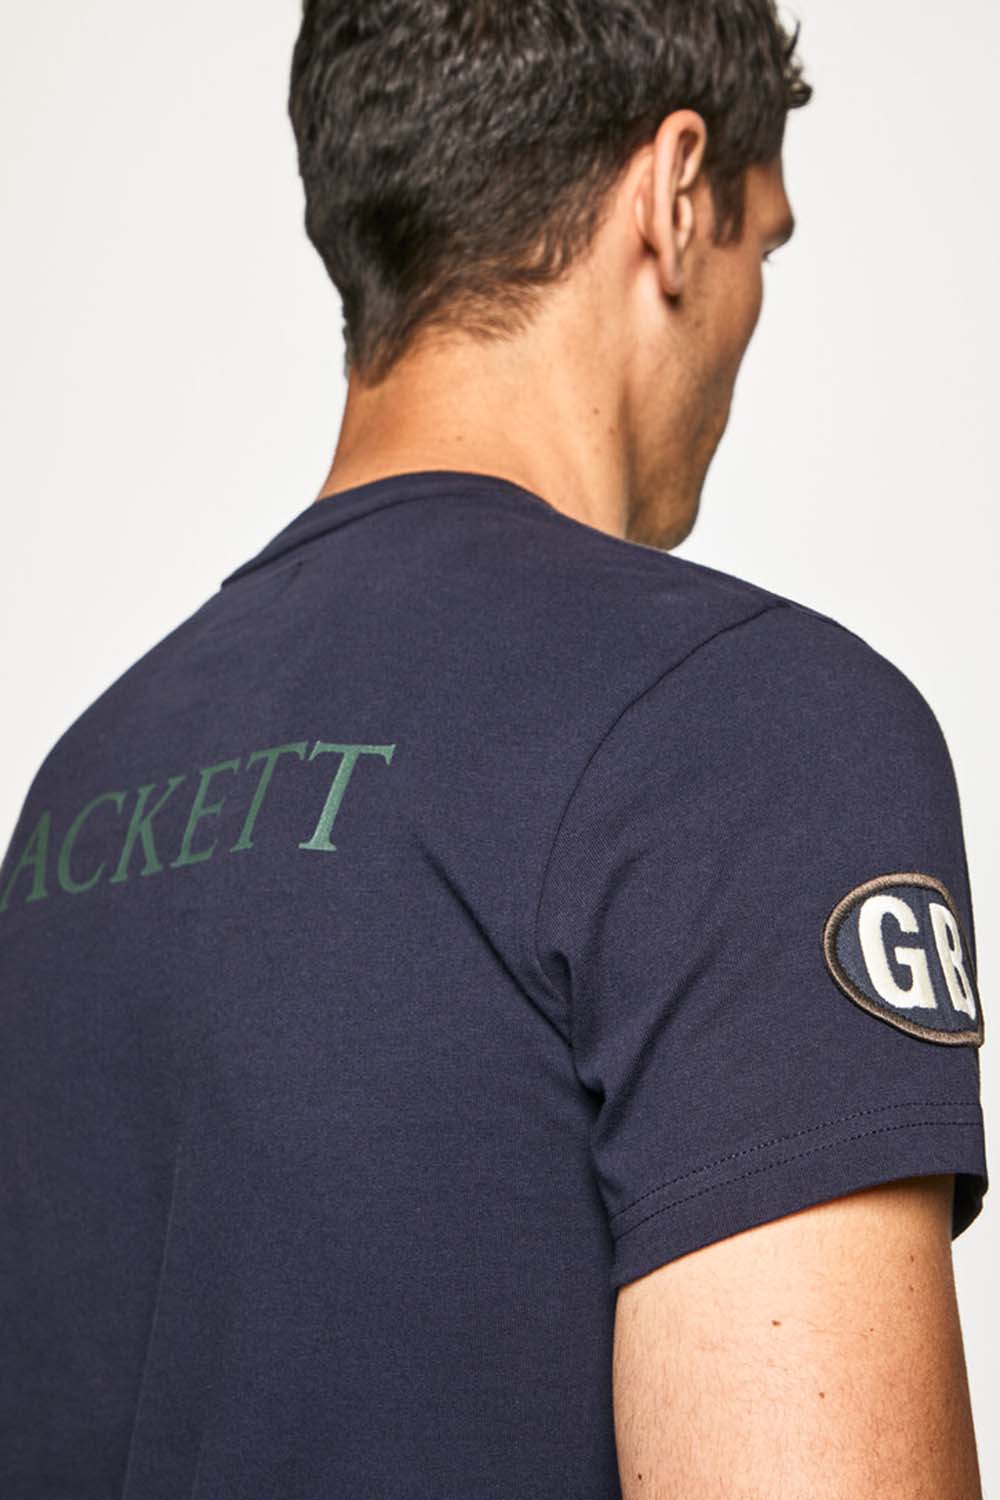 Hackett Mens S/S R-N (England Flag Print) T-Shirt HM500503